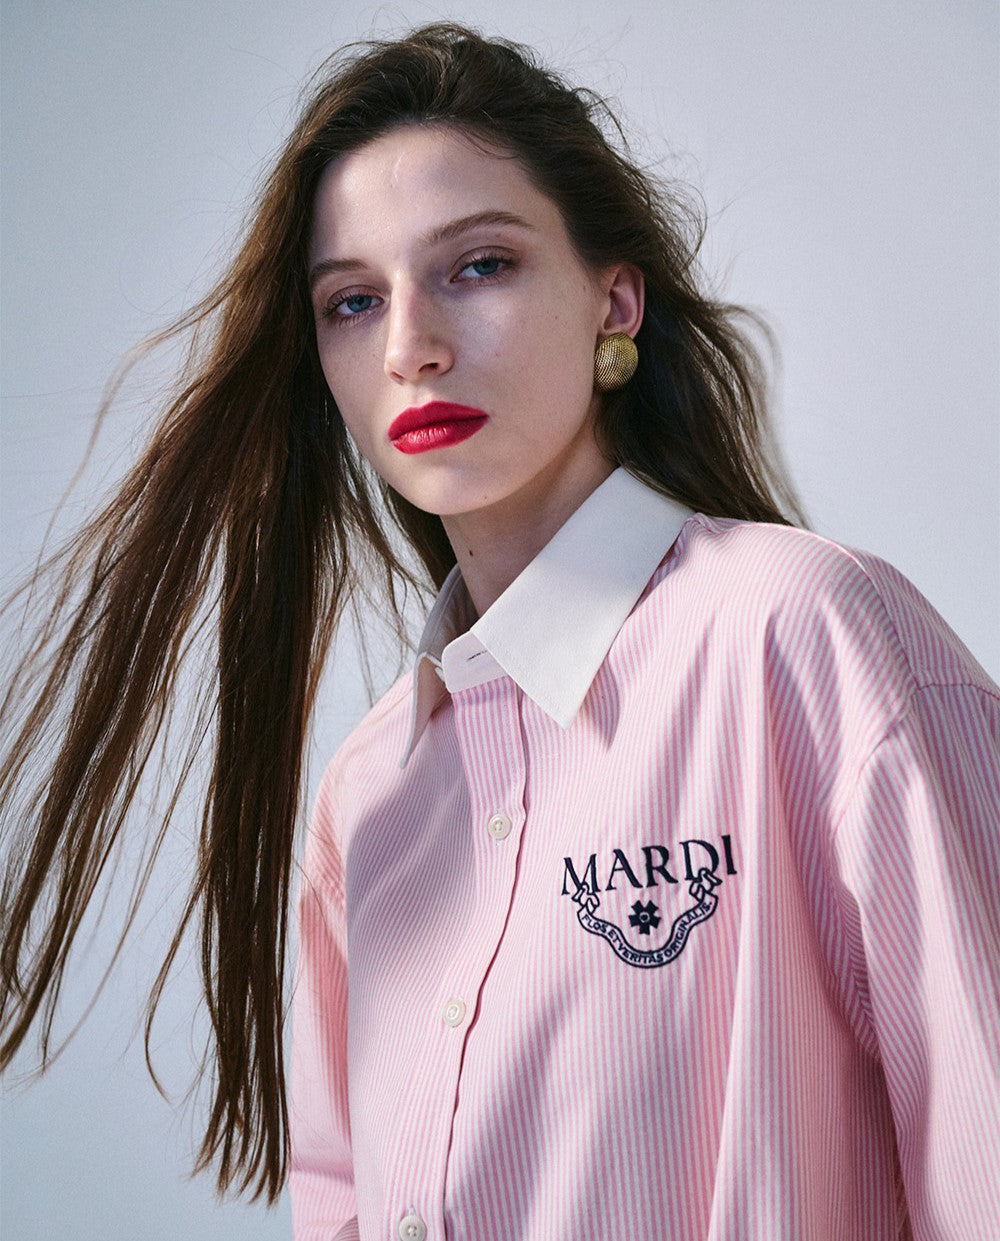 Mardi Mercredi • Oxford Shirt Alumni Classique (Pink Navy)